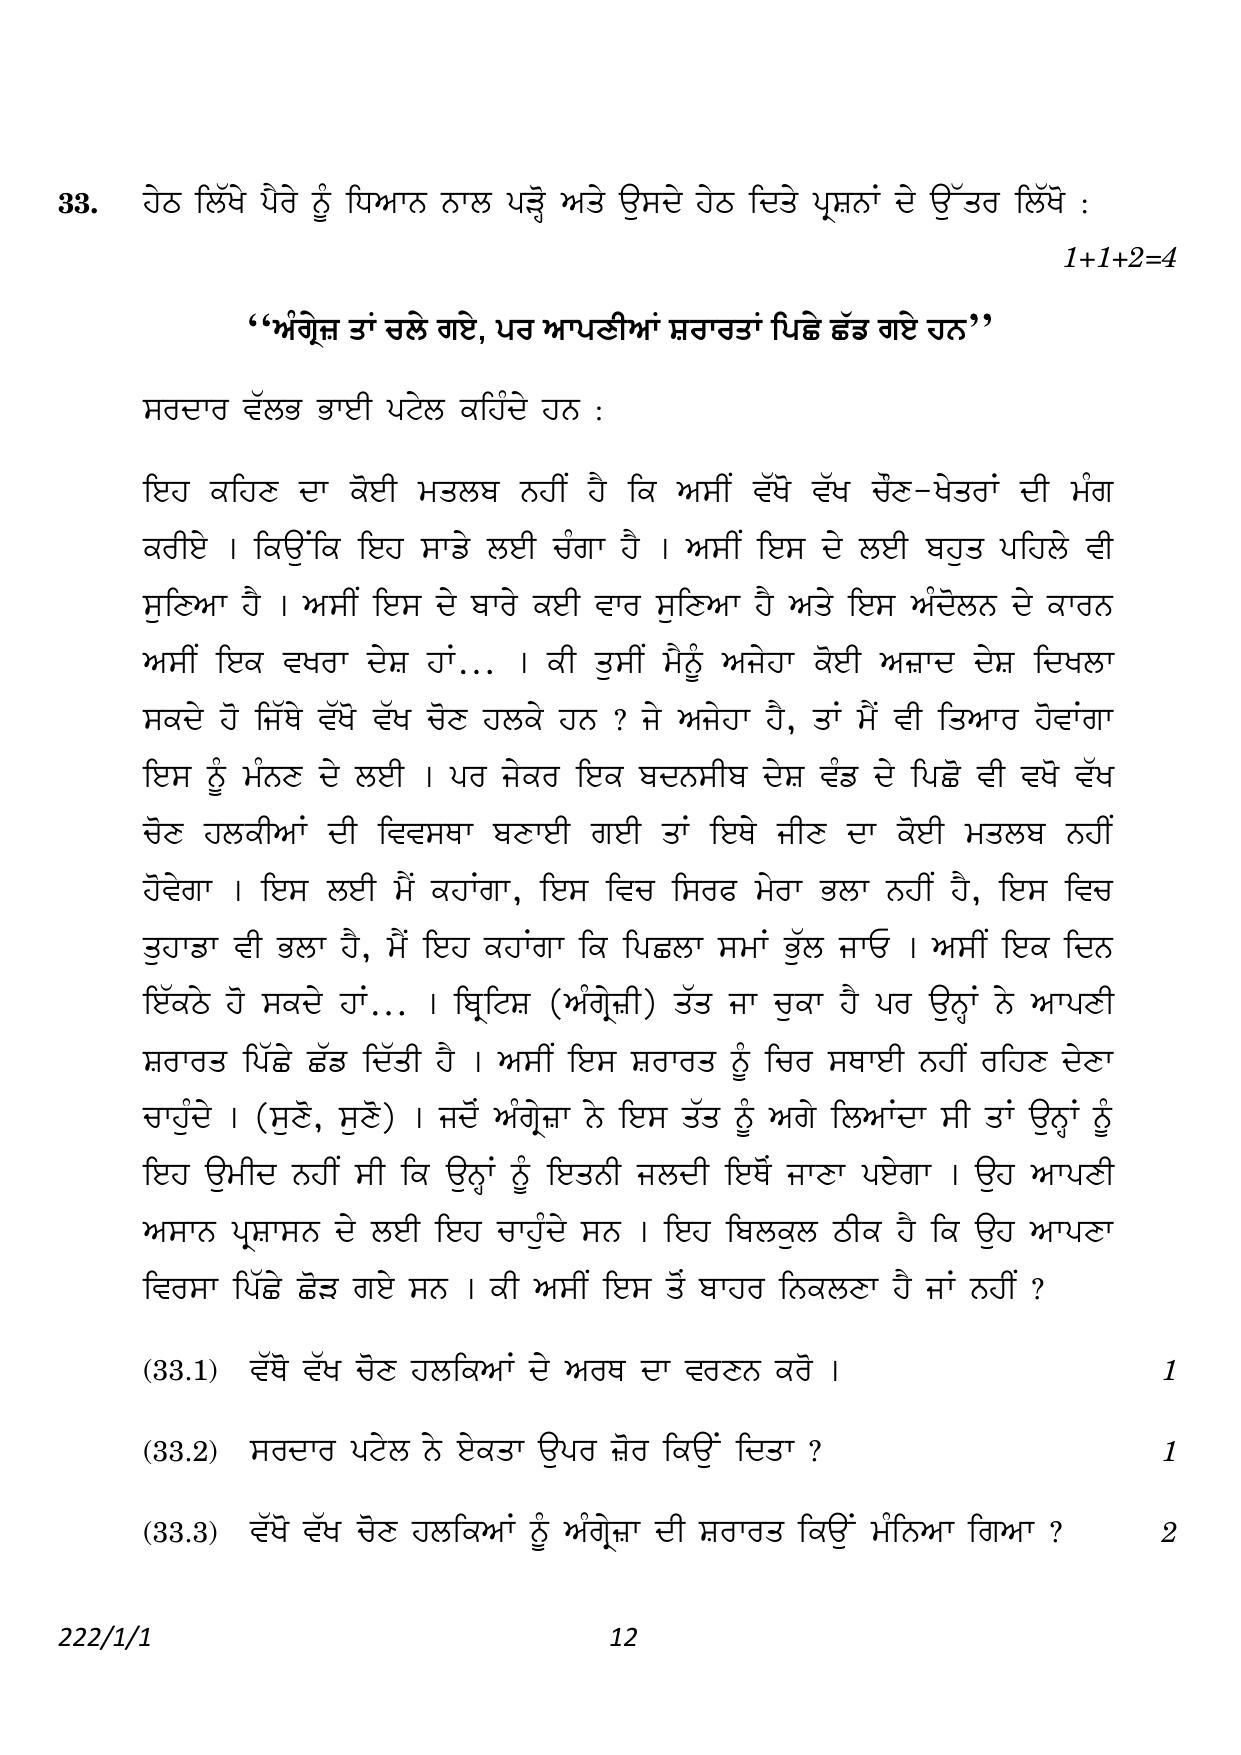 CBSE Class 12 222-1-1 History Punjabi version 2023 Question Paper - Page 12